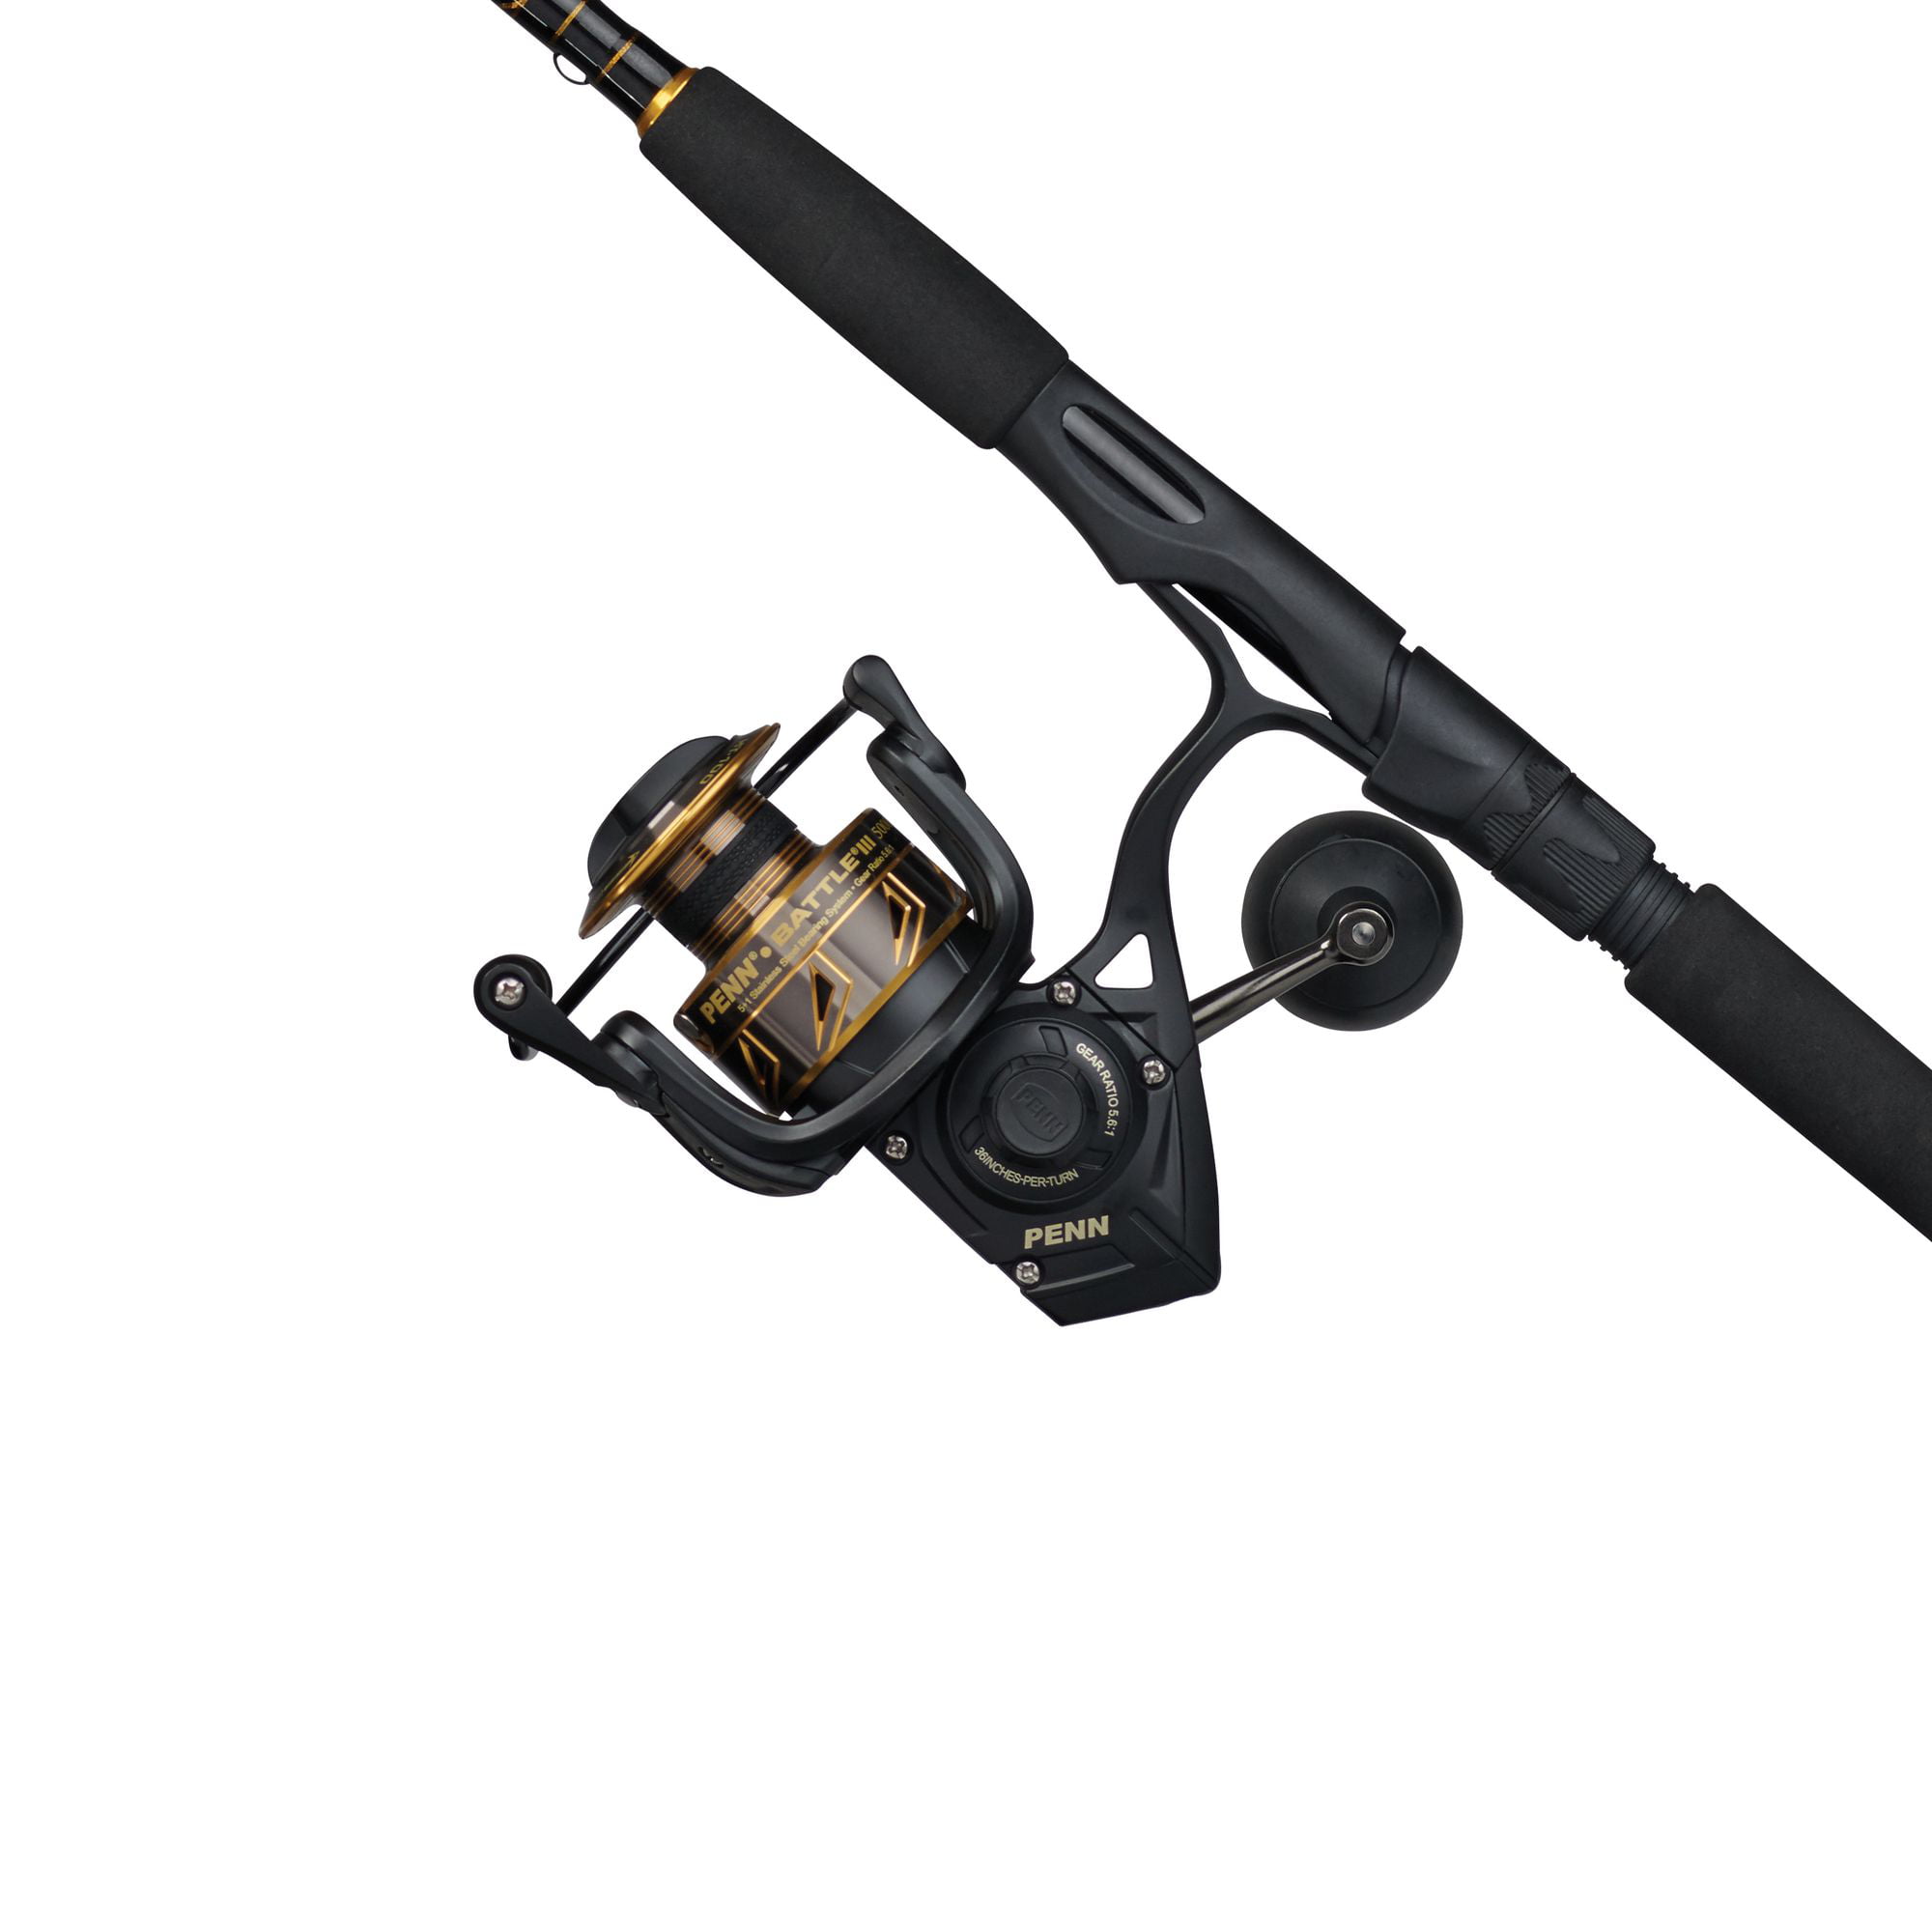 PENN 7' Battle III Fishing Rod and Reel Spinning Combo 